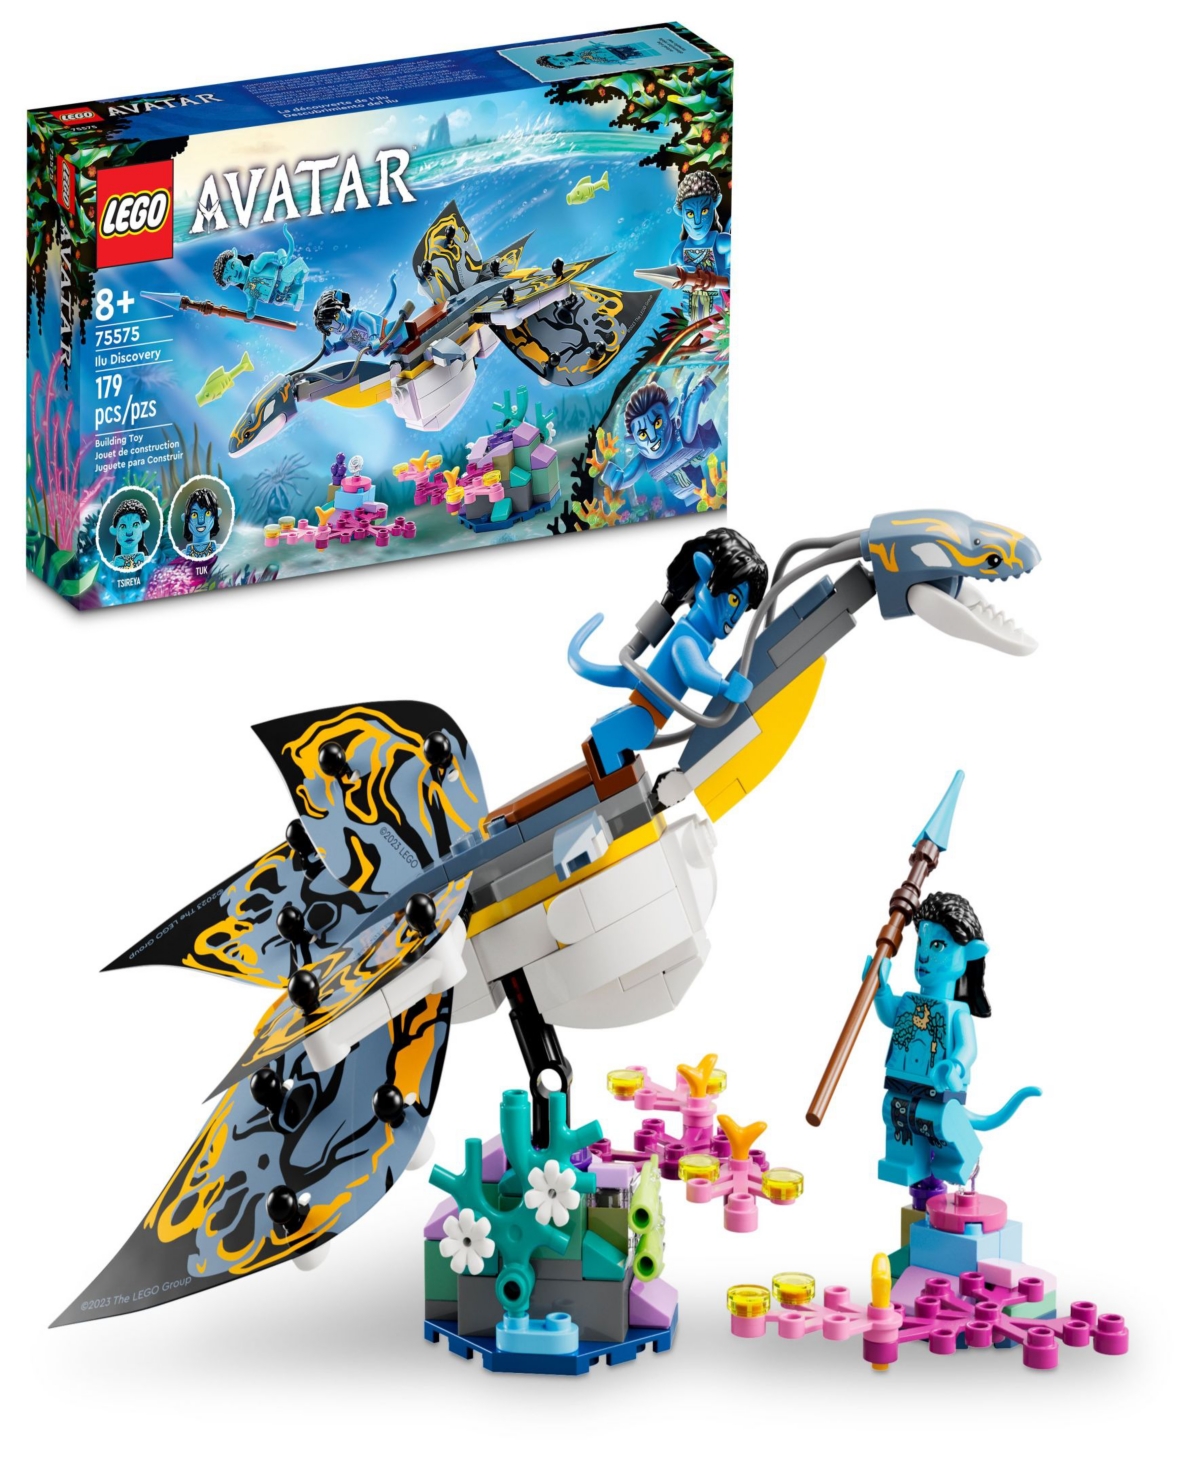 Lego Avatar 75575 Ilu Discovery Toy Building Set With Tsireya & Tuk Minifigures In Multicolor